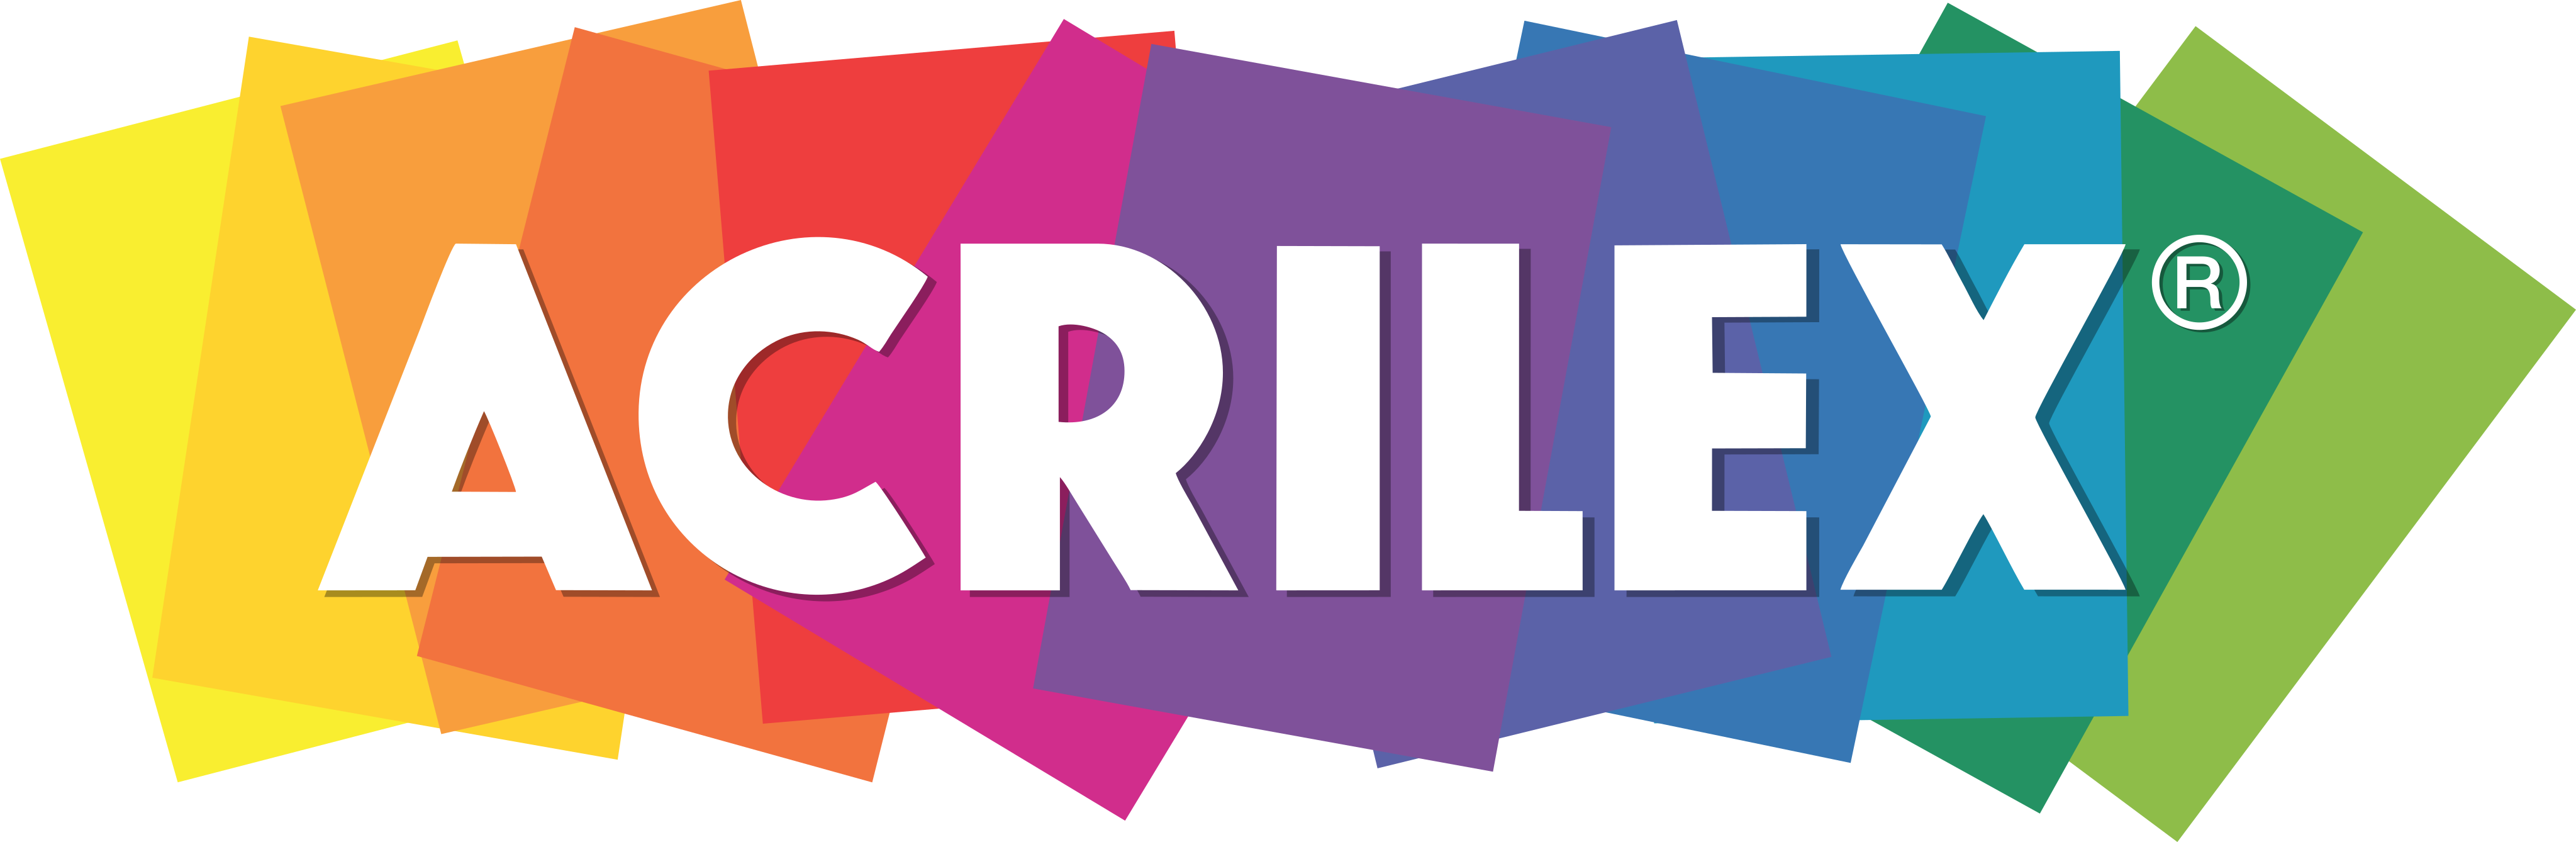 Acrilex Logo.